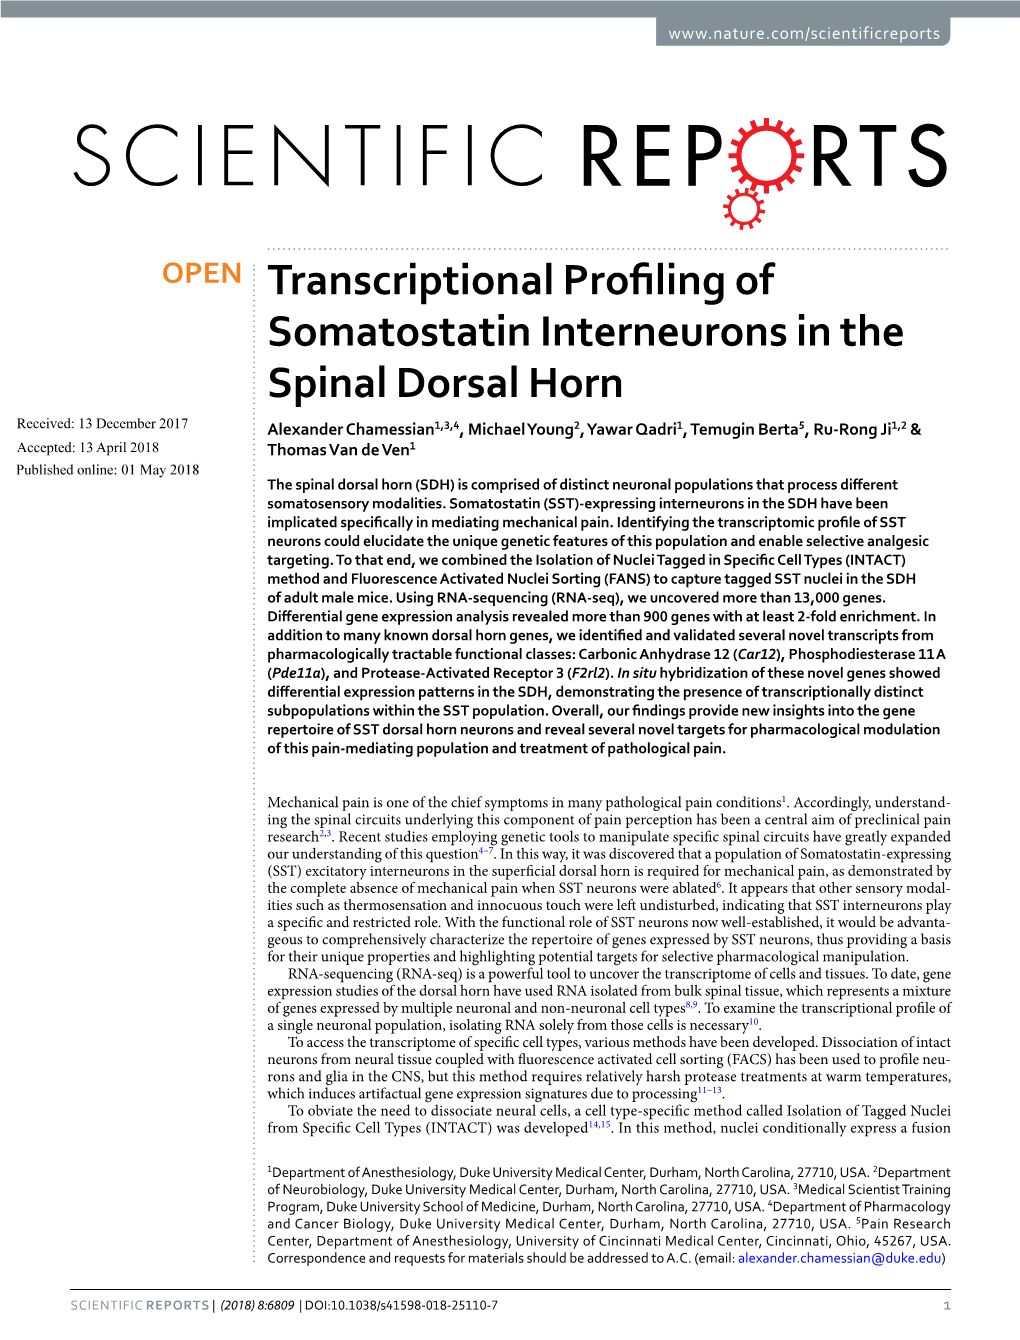 Transcriptional Profiling of Somatostatin Interneurons